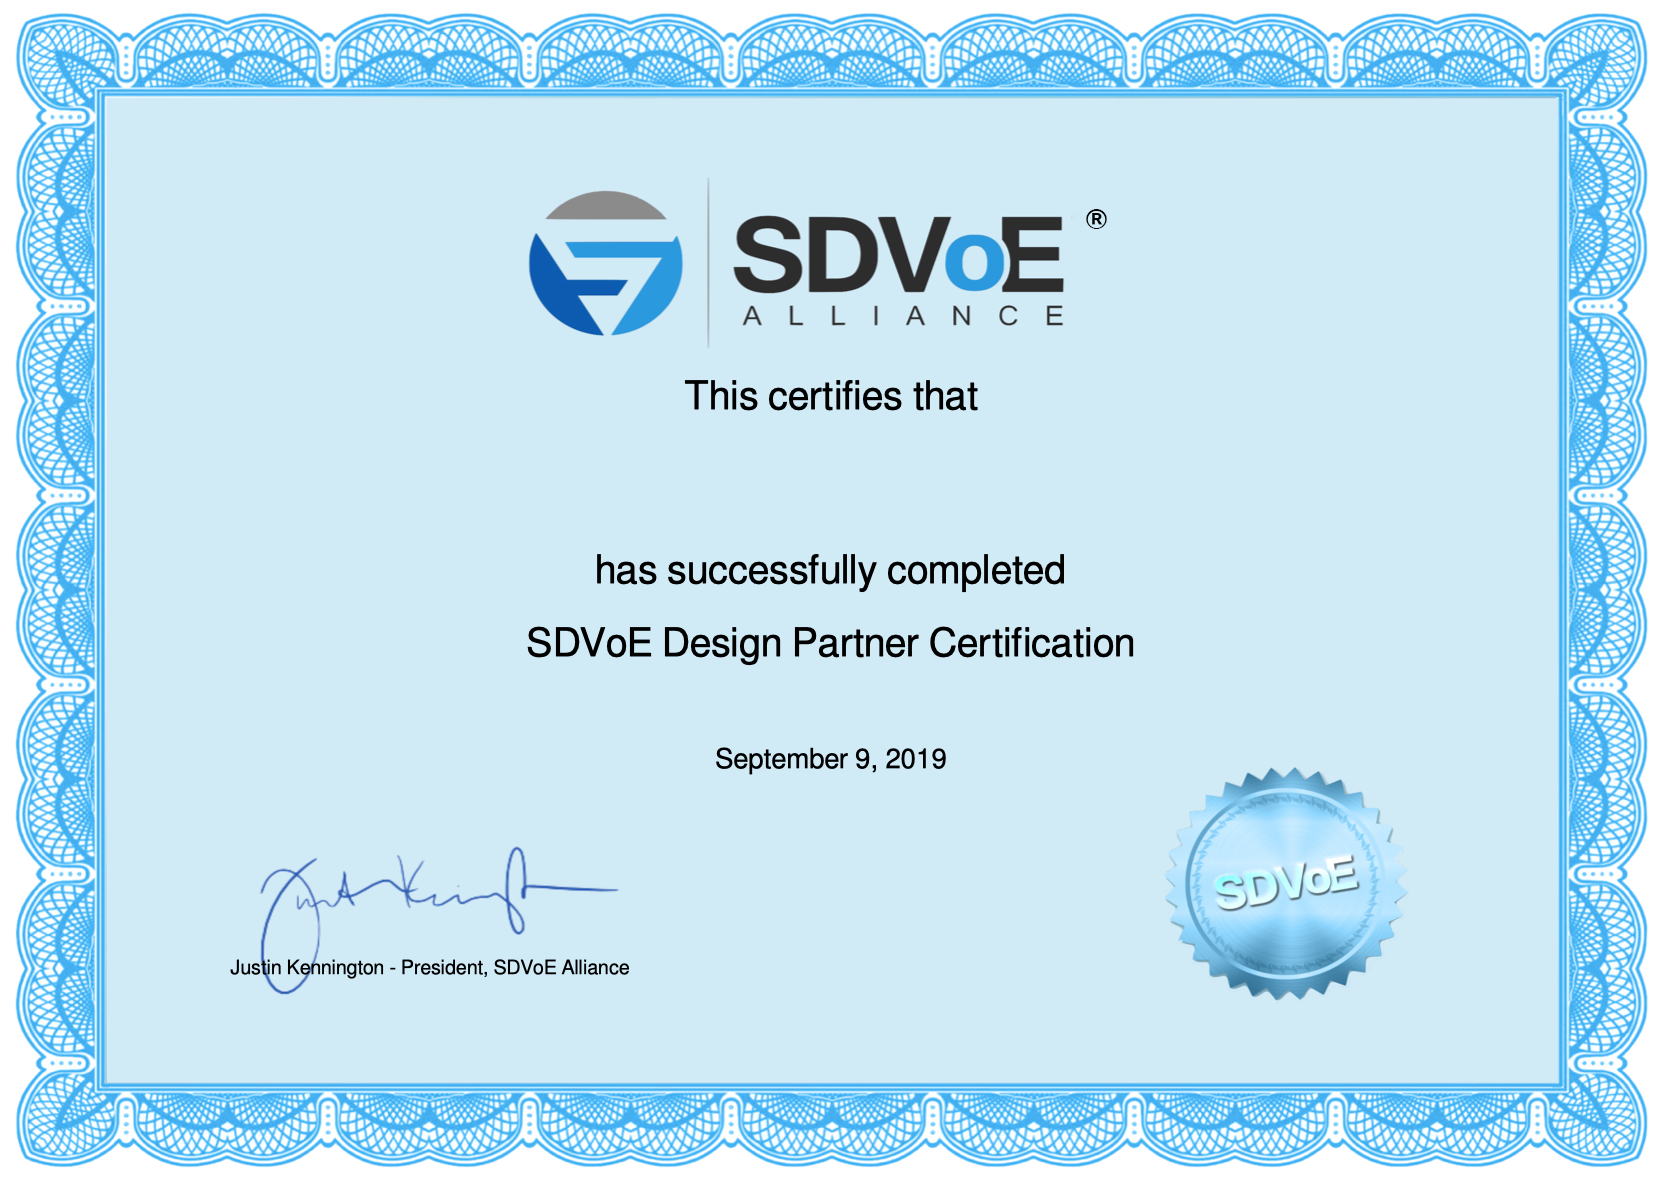 SDVoE Design Partner Certification